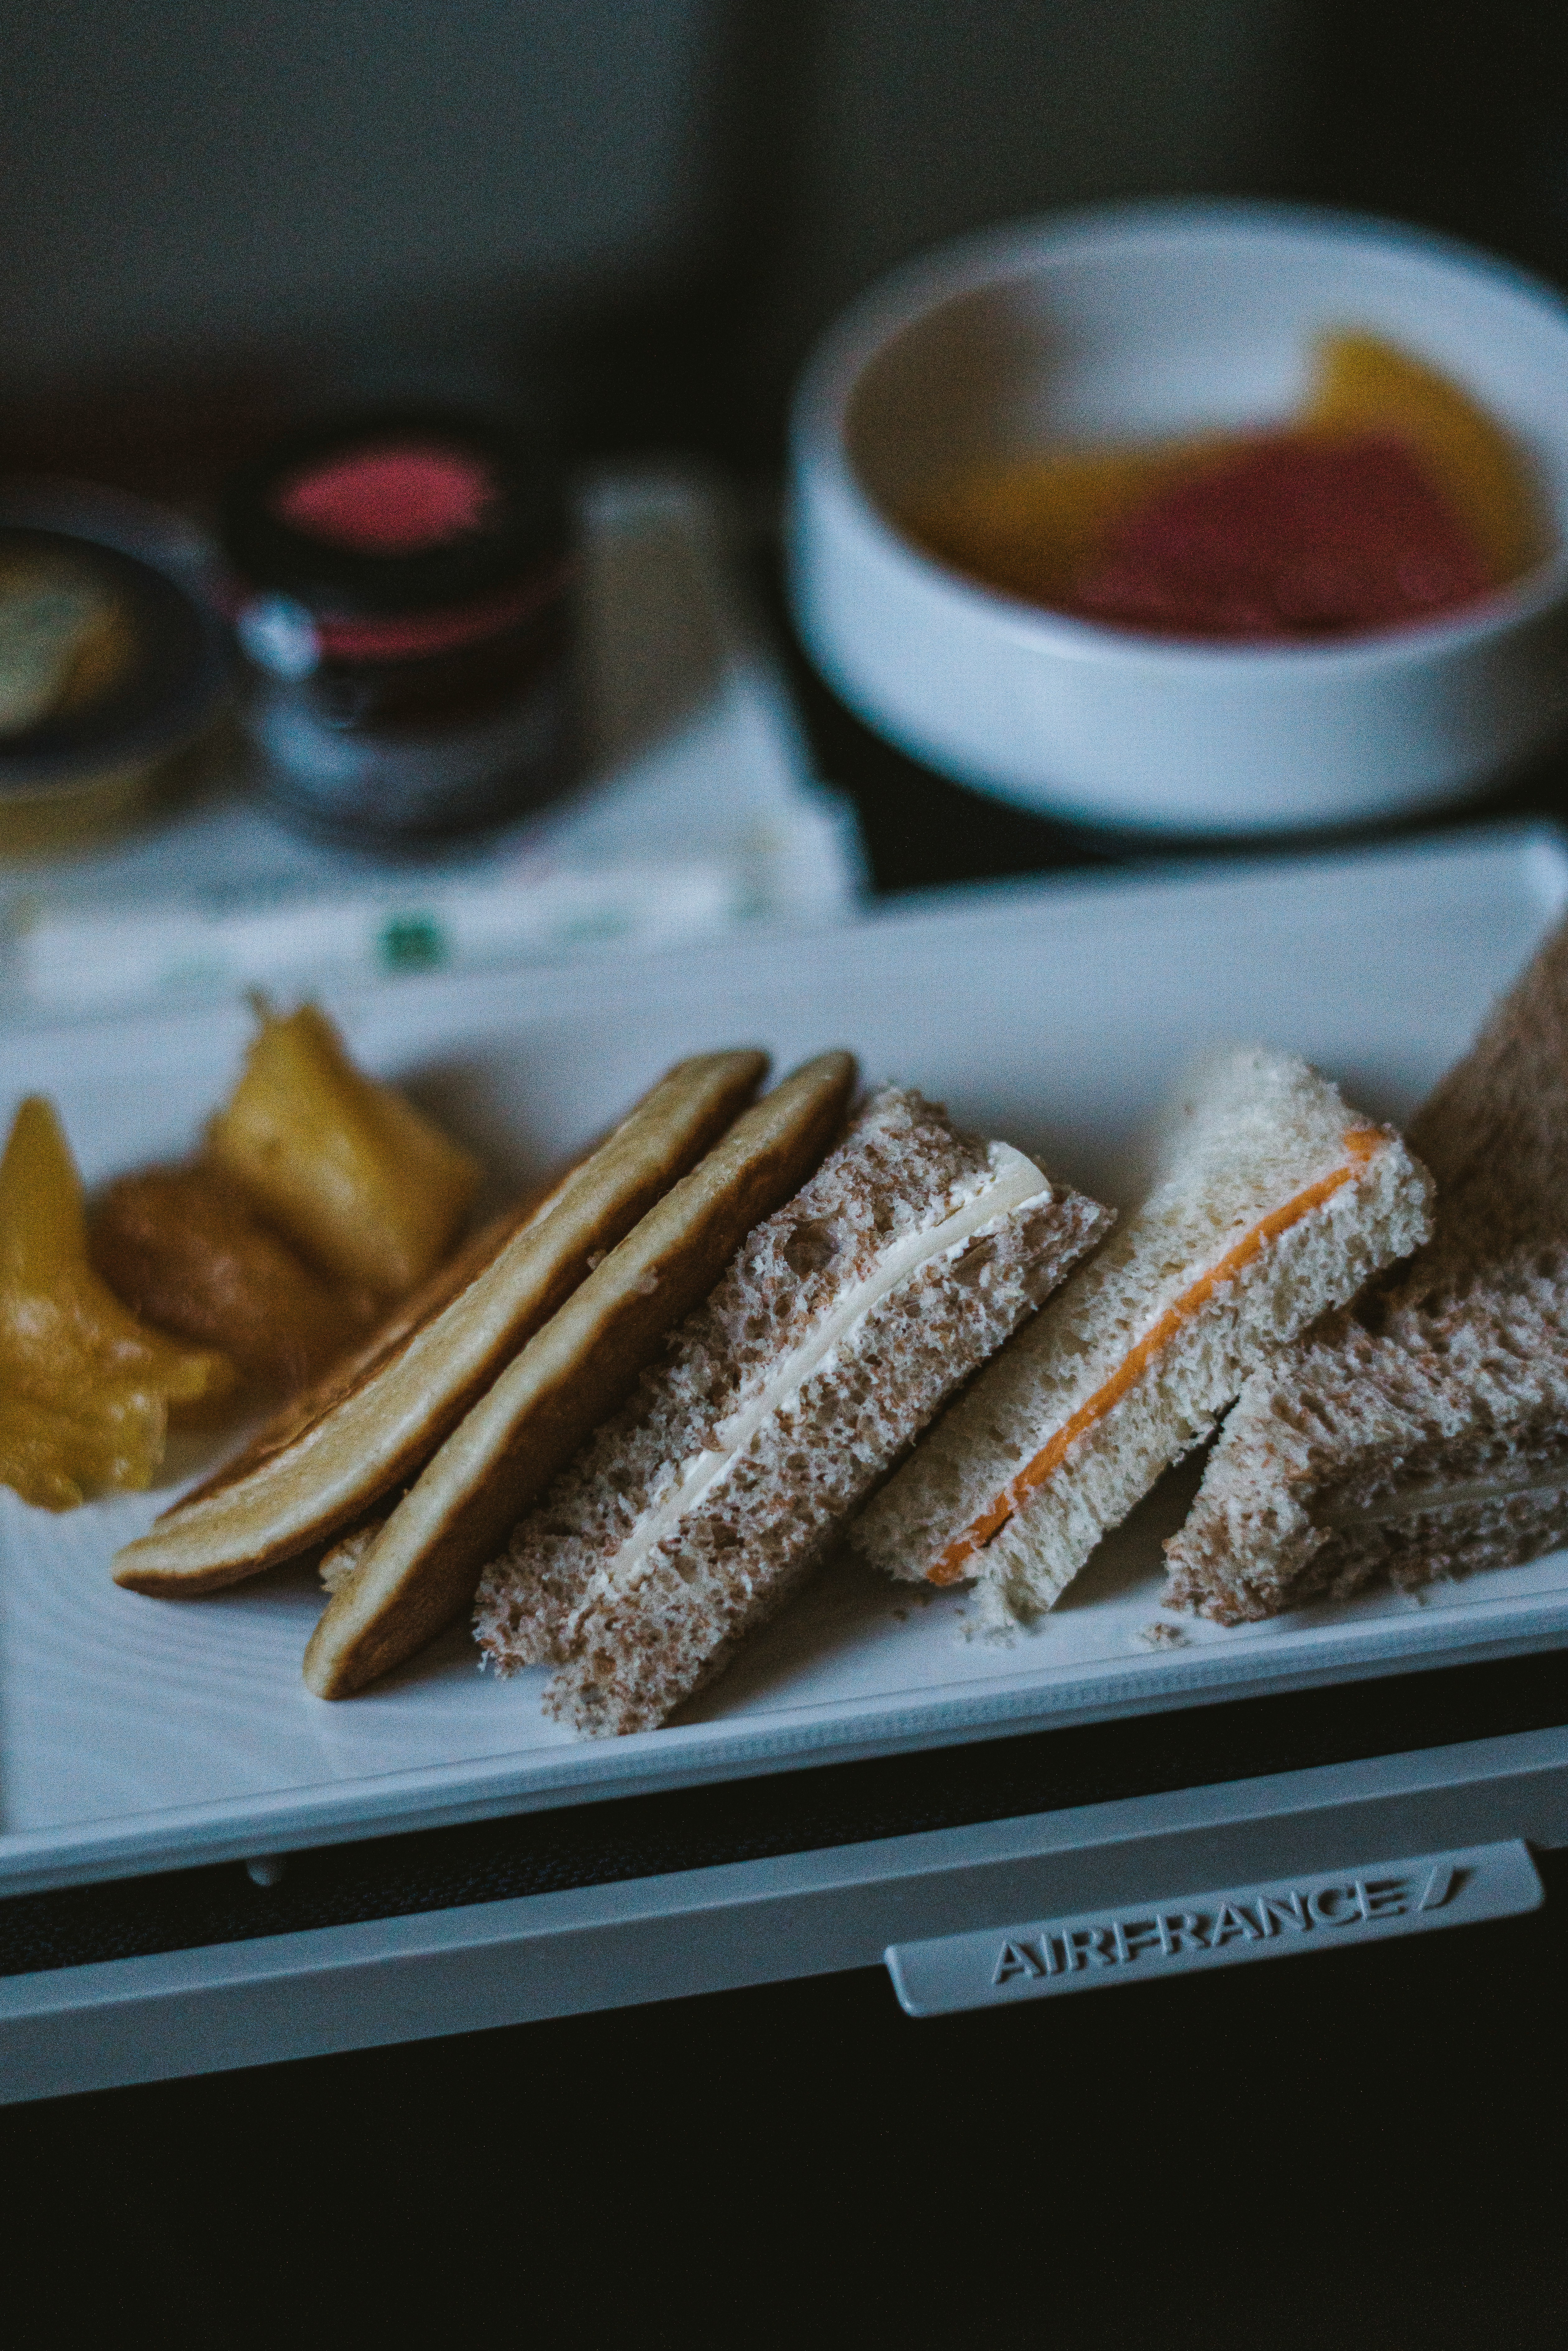 A plate of food on a flight | Source: Unsplash